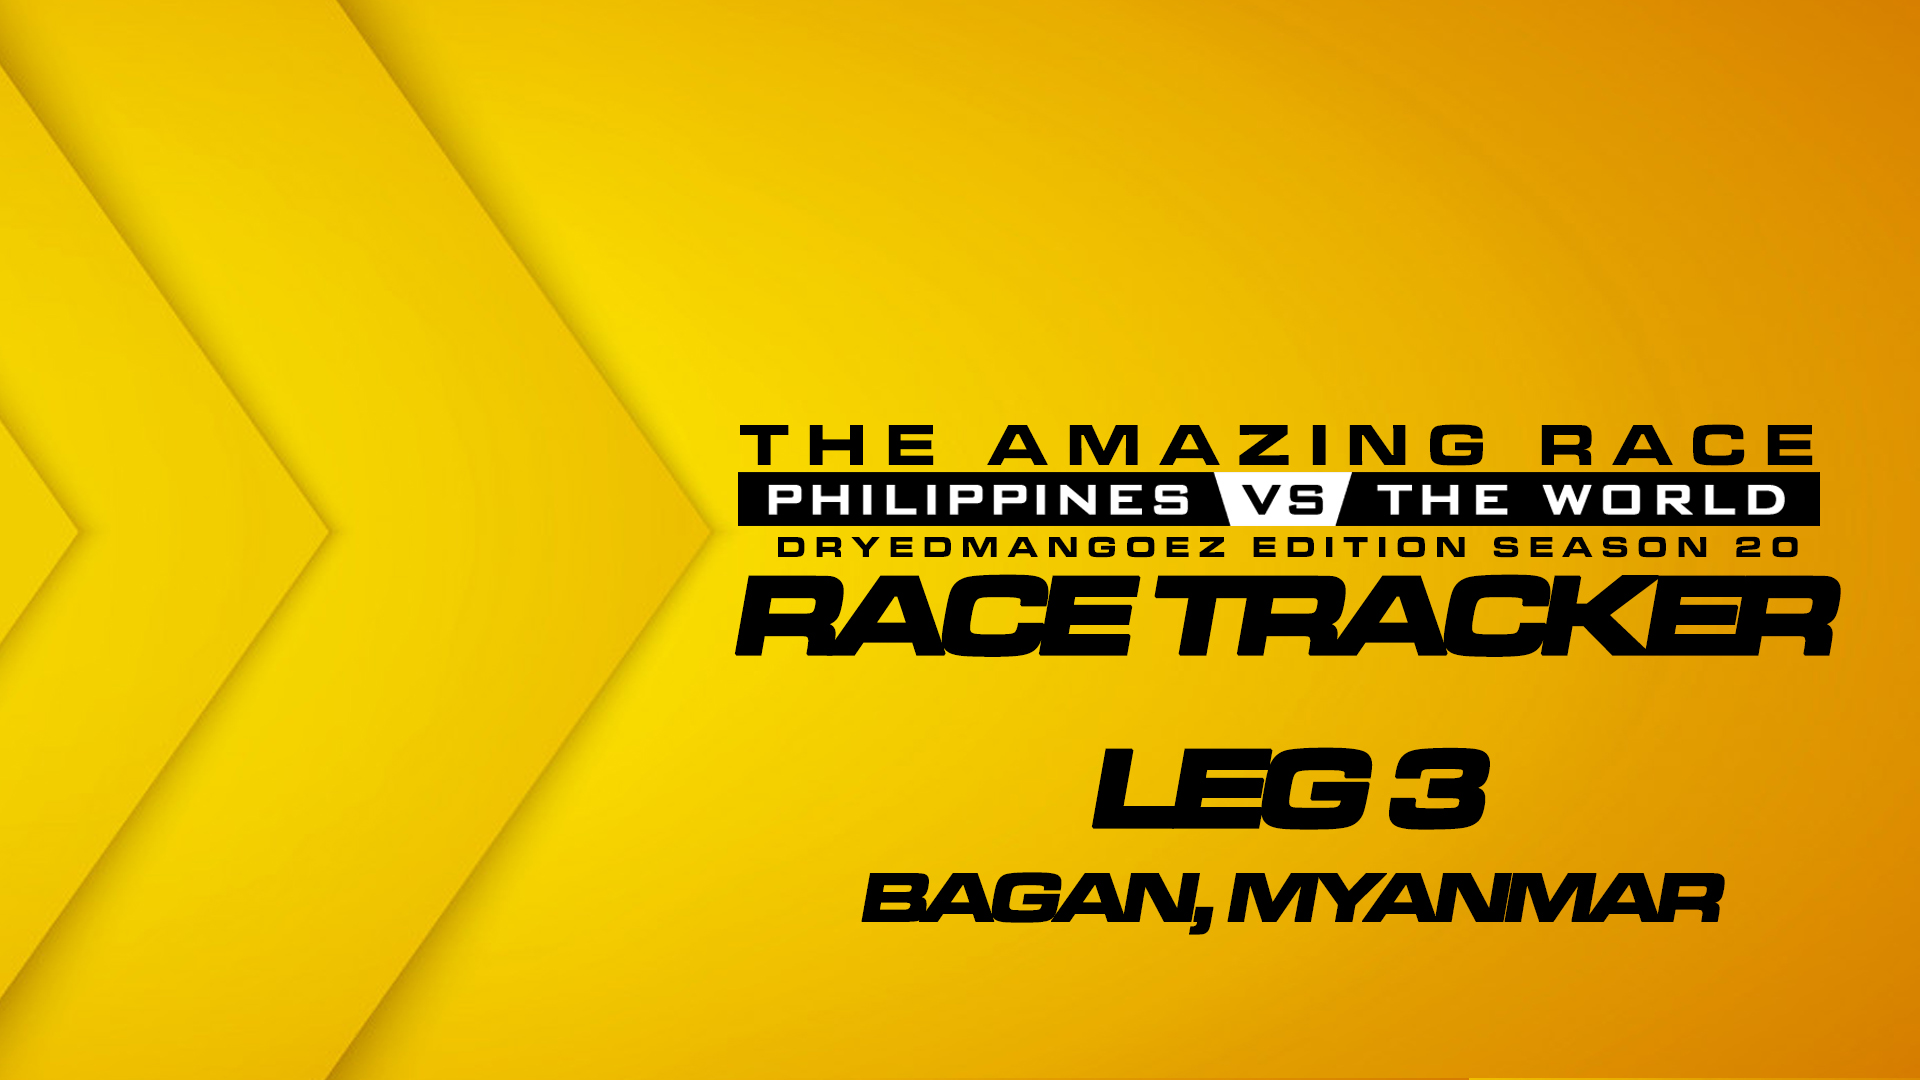 The Amazing Race Philippines vs The World (DryedMangoez Edition Season 20) Race Tracker – Leg 3